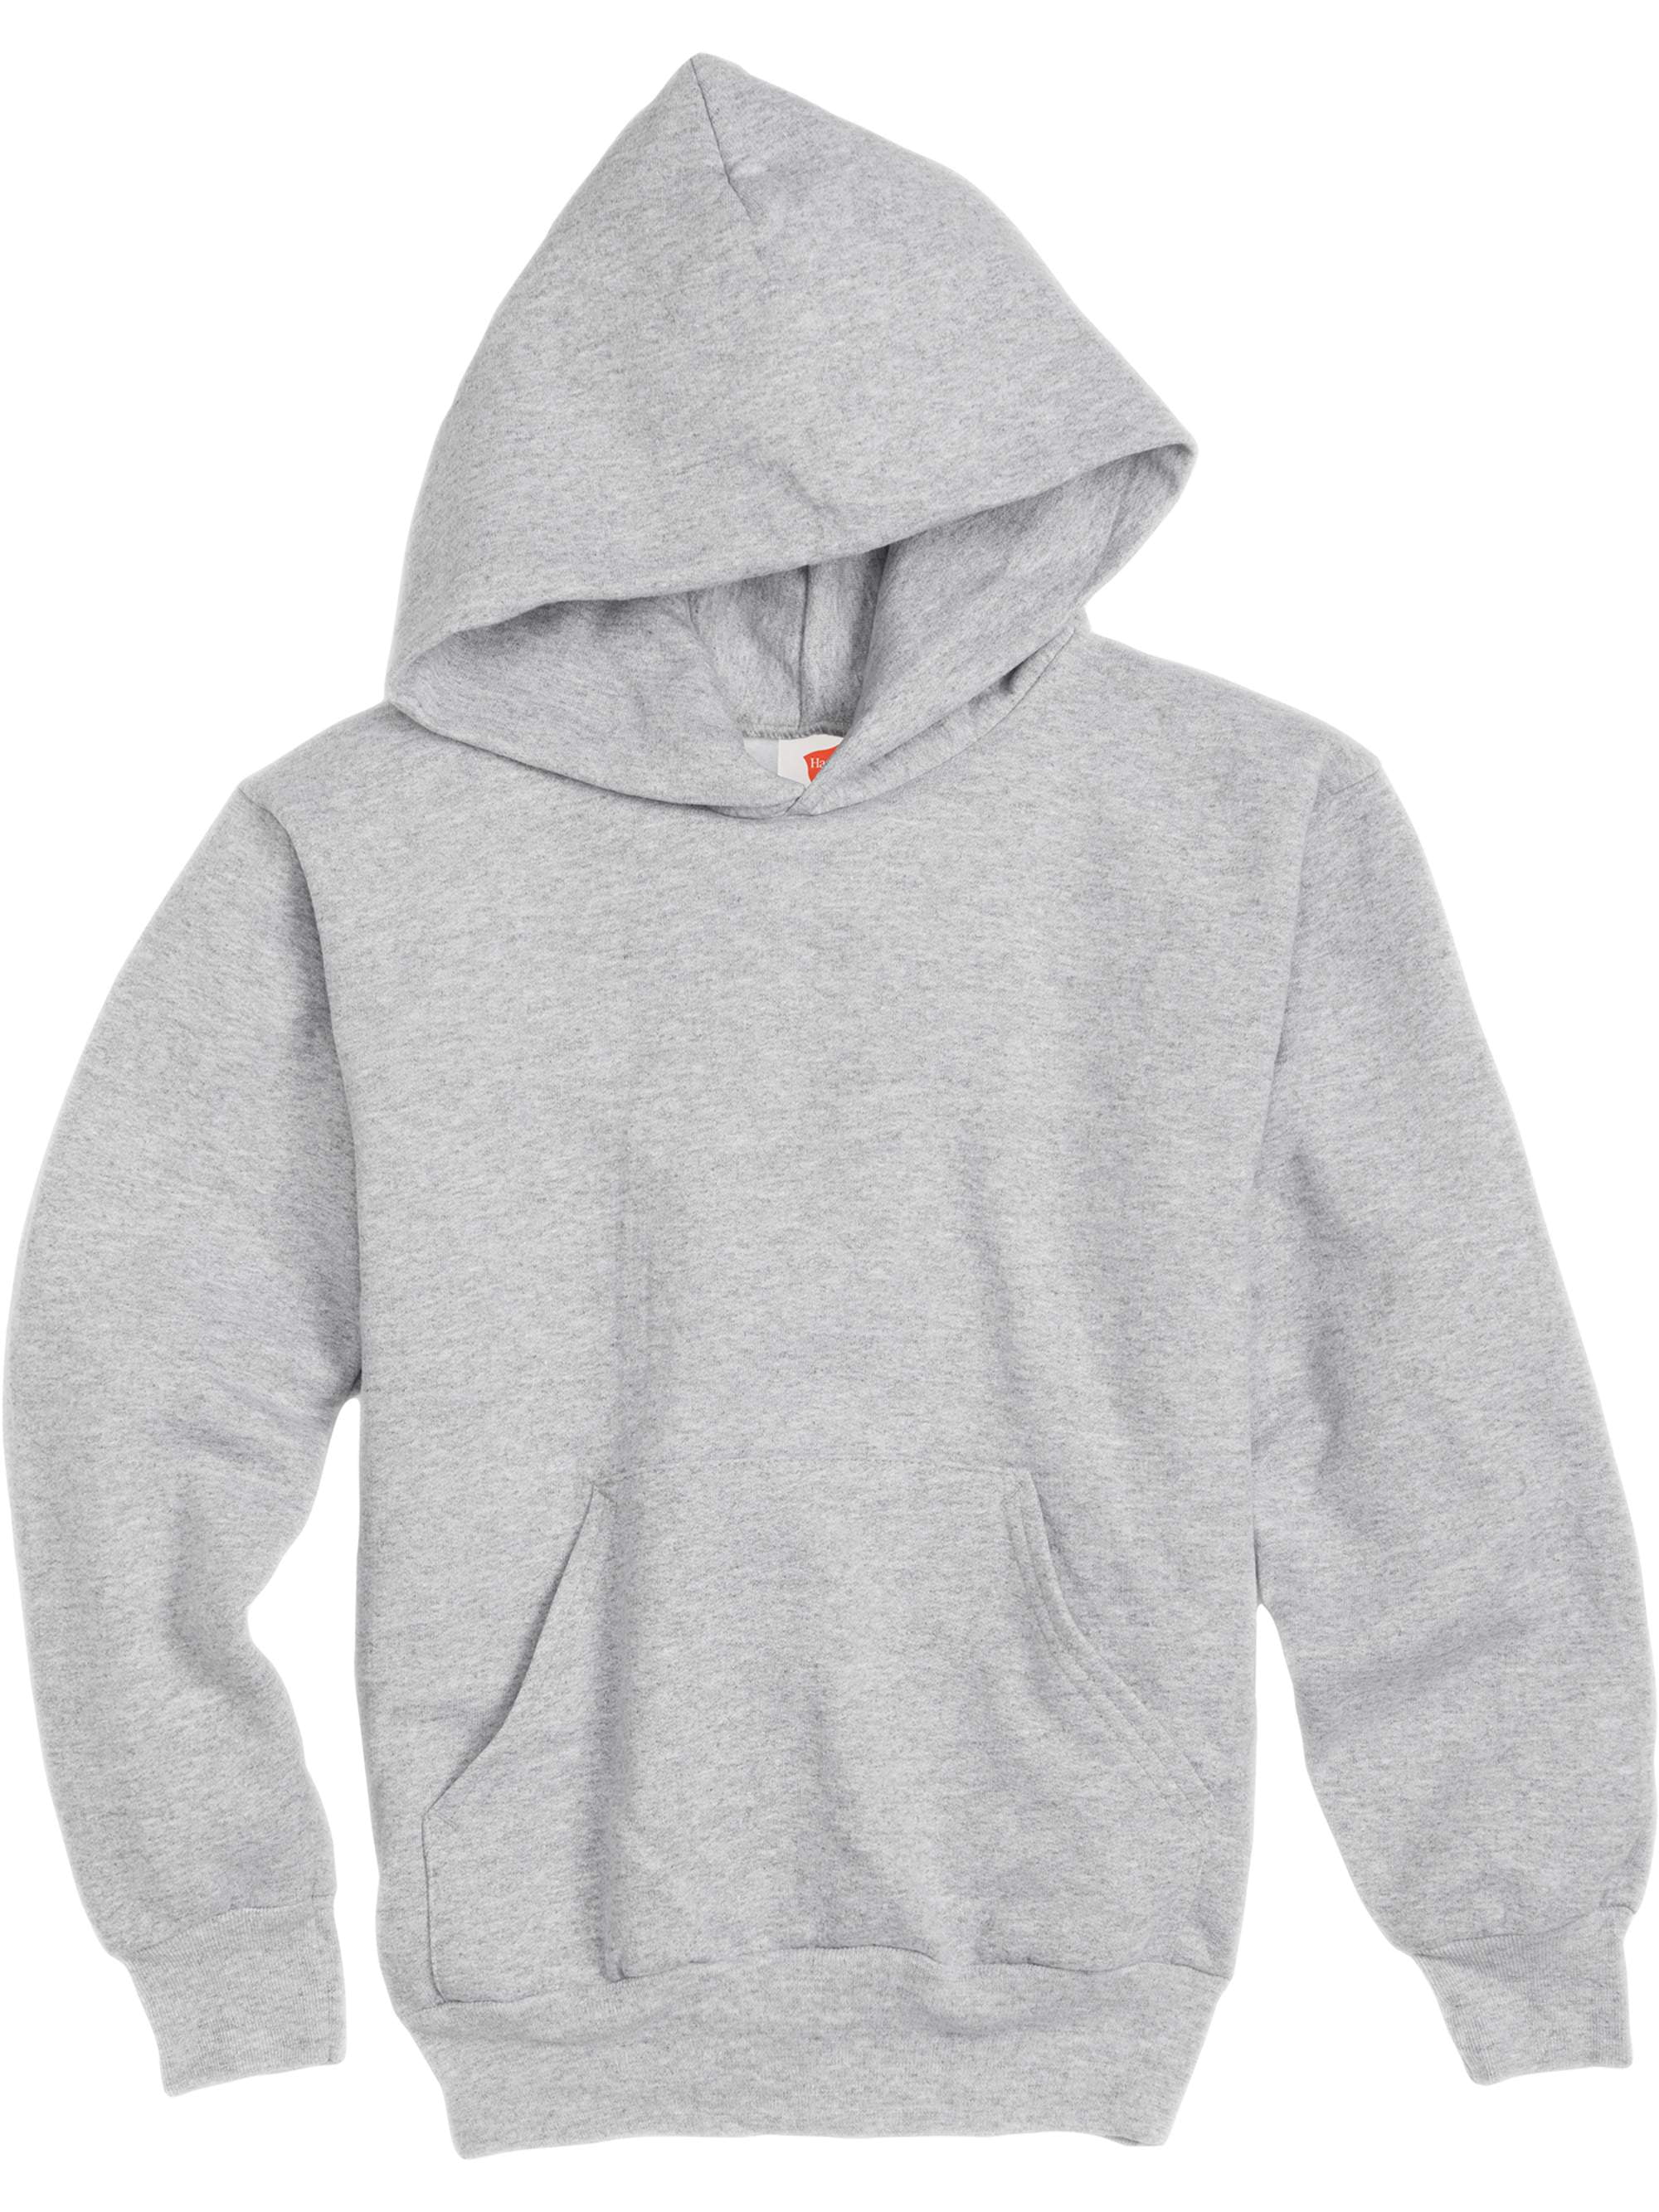 4-5 GAP KIDS Boy's Gray Navy Logo Hoodie Sweatshirt Size XS 